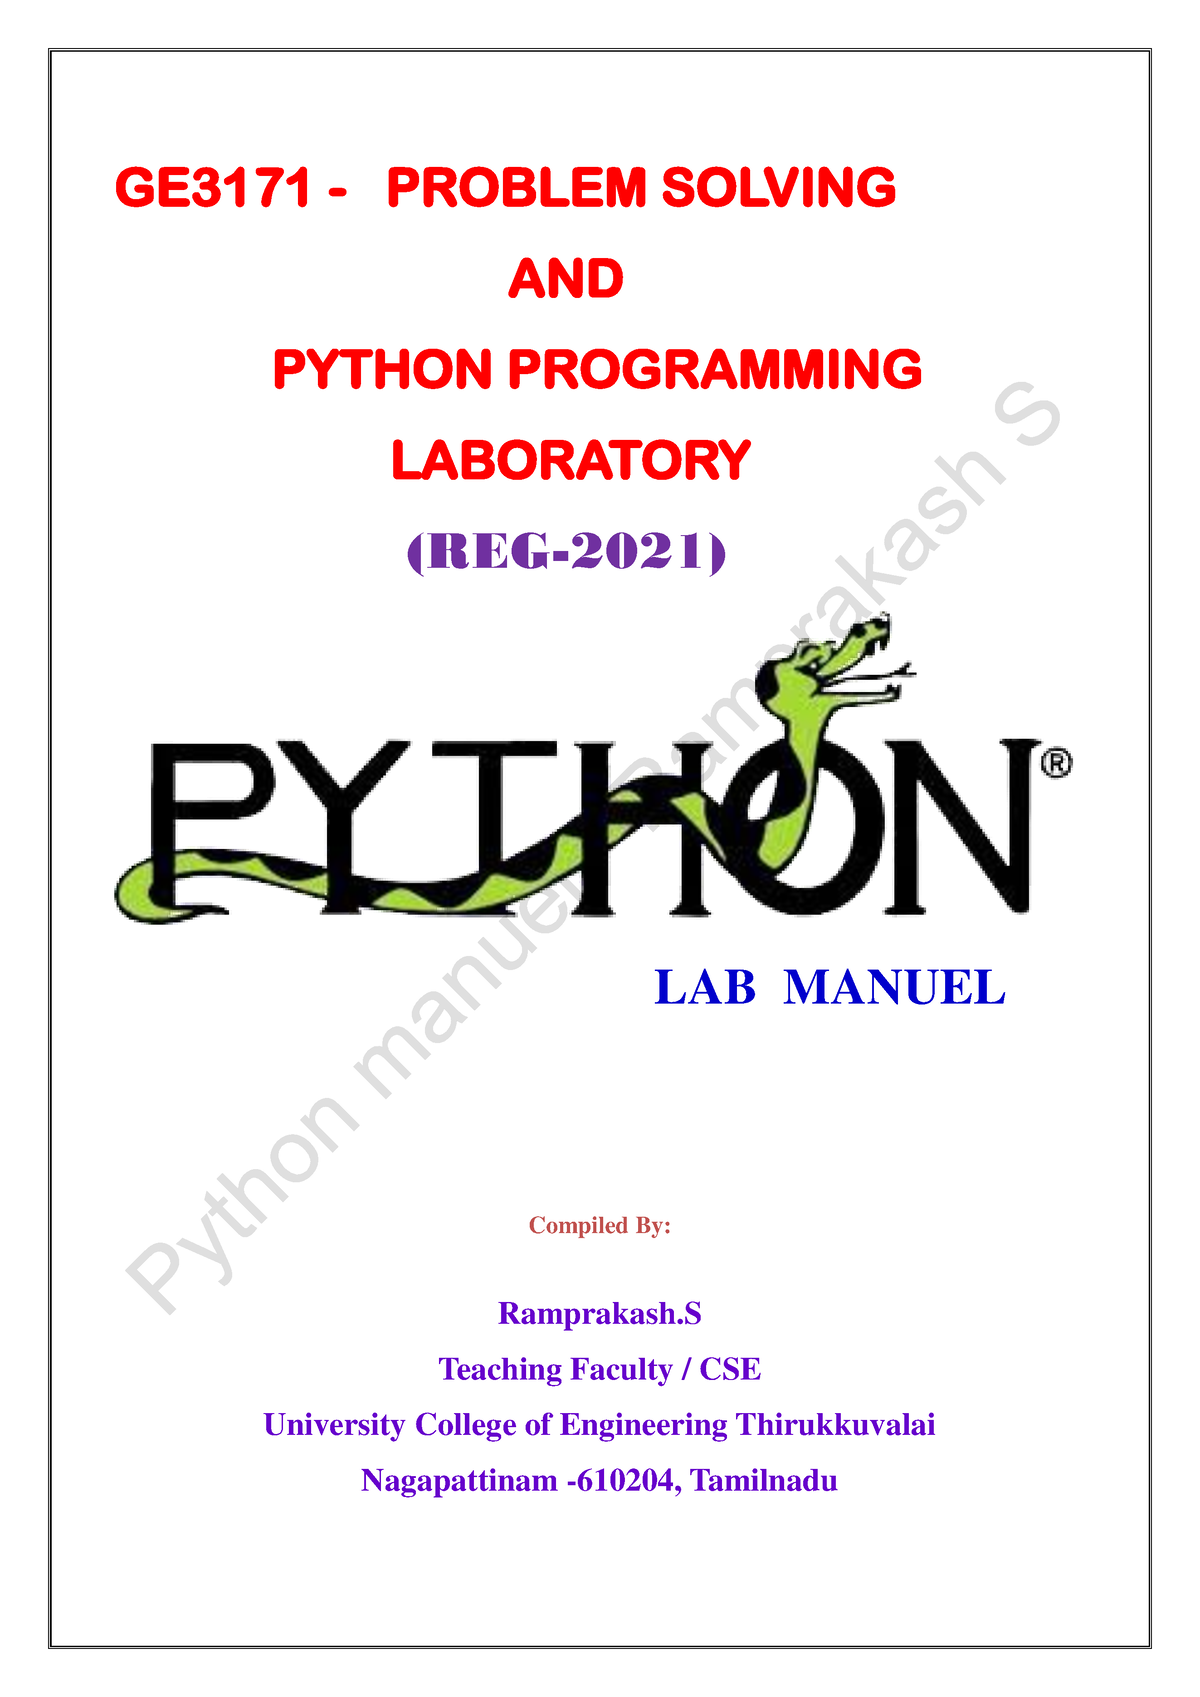 ge3171 problem solving and python programming laboratory